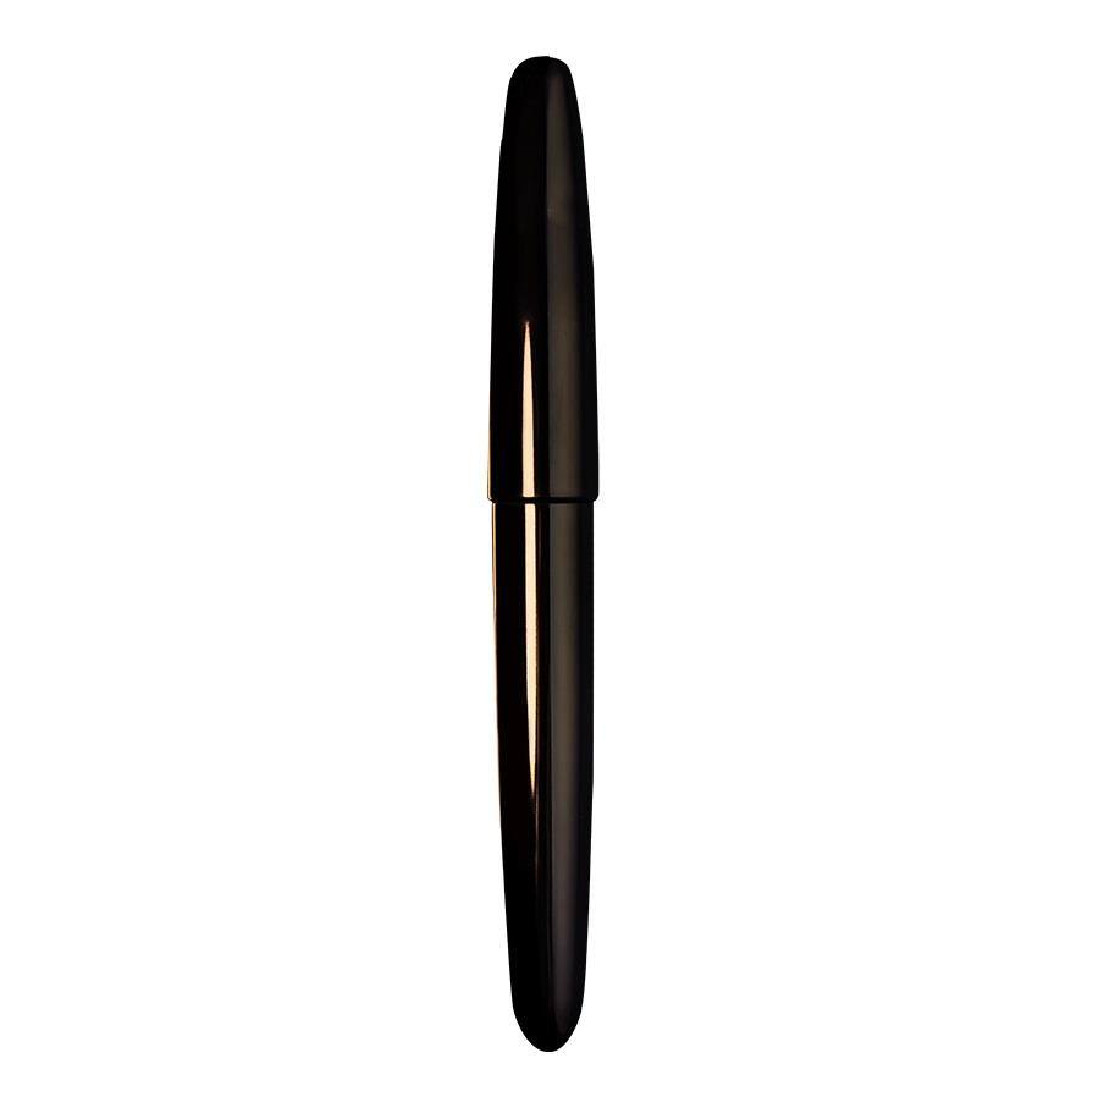 Wancher True Urushi Black stainless steel nib fountain pen